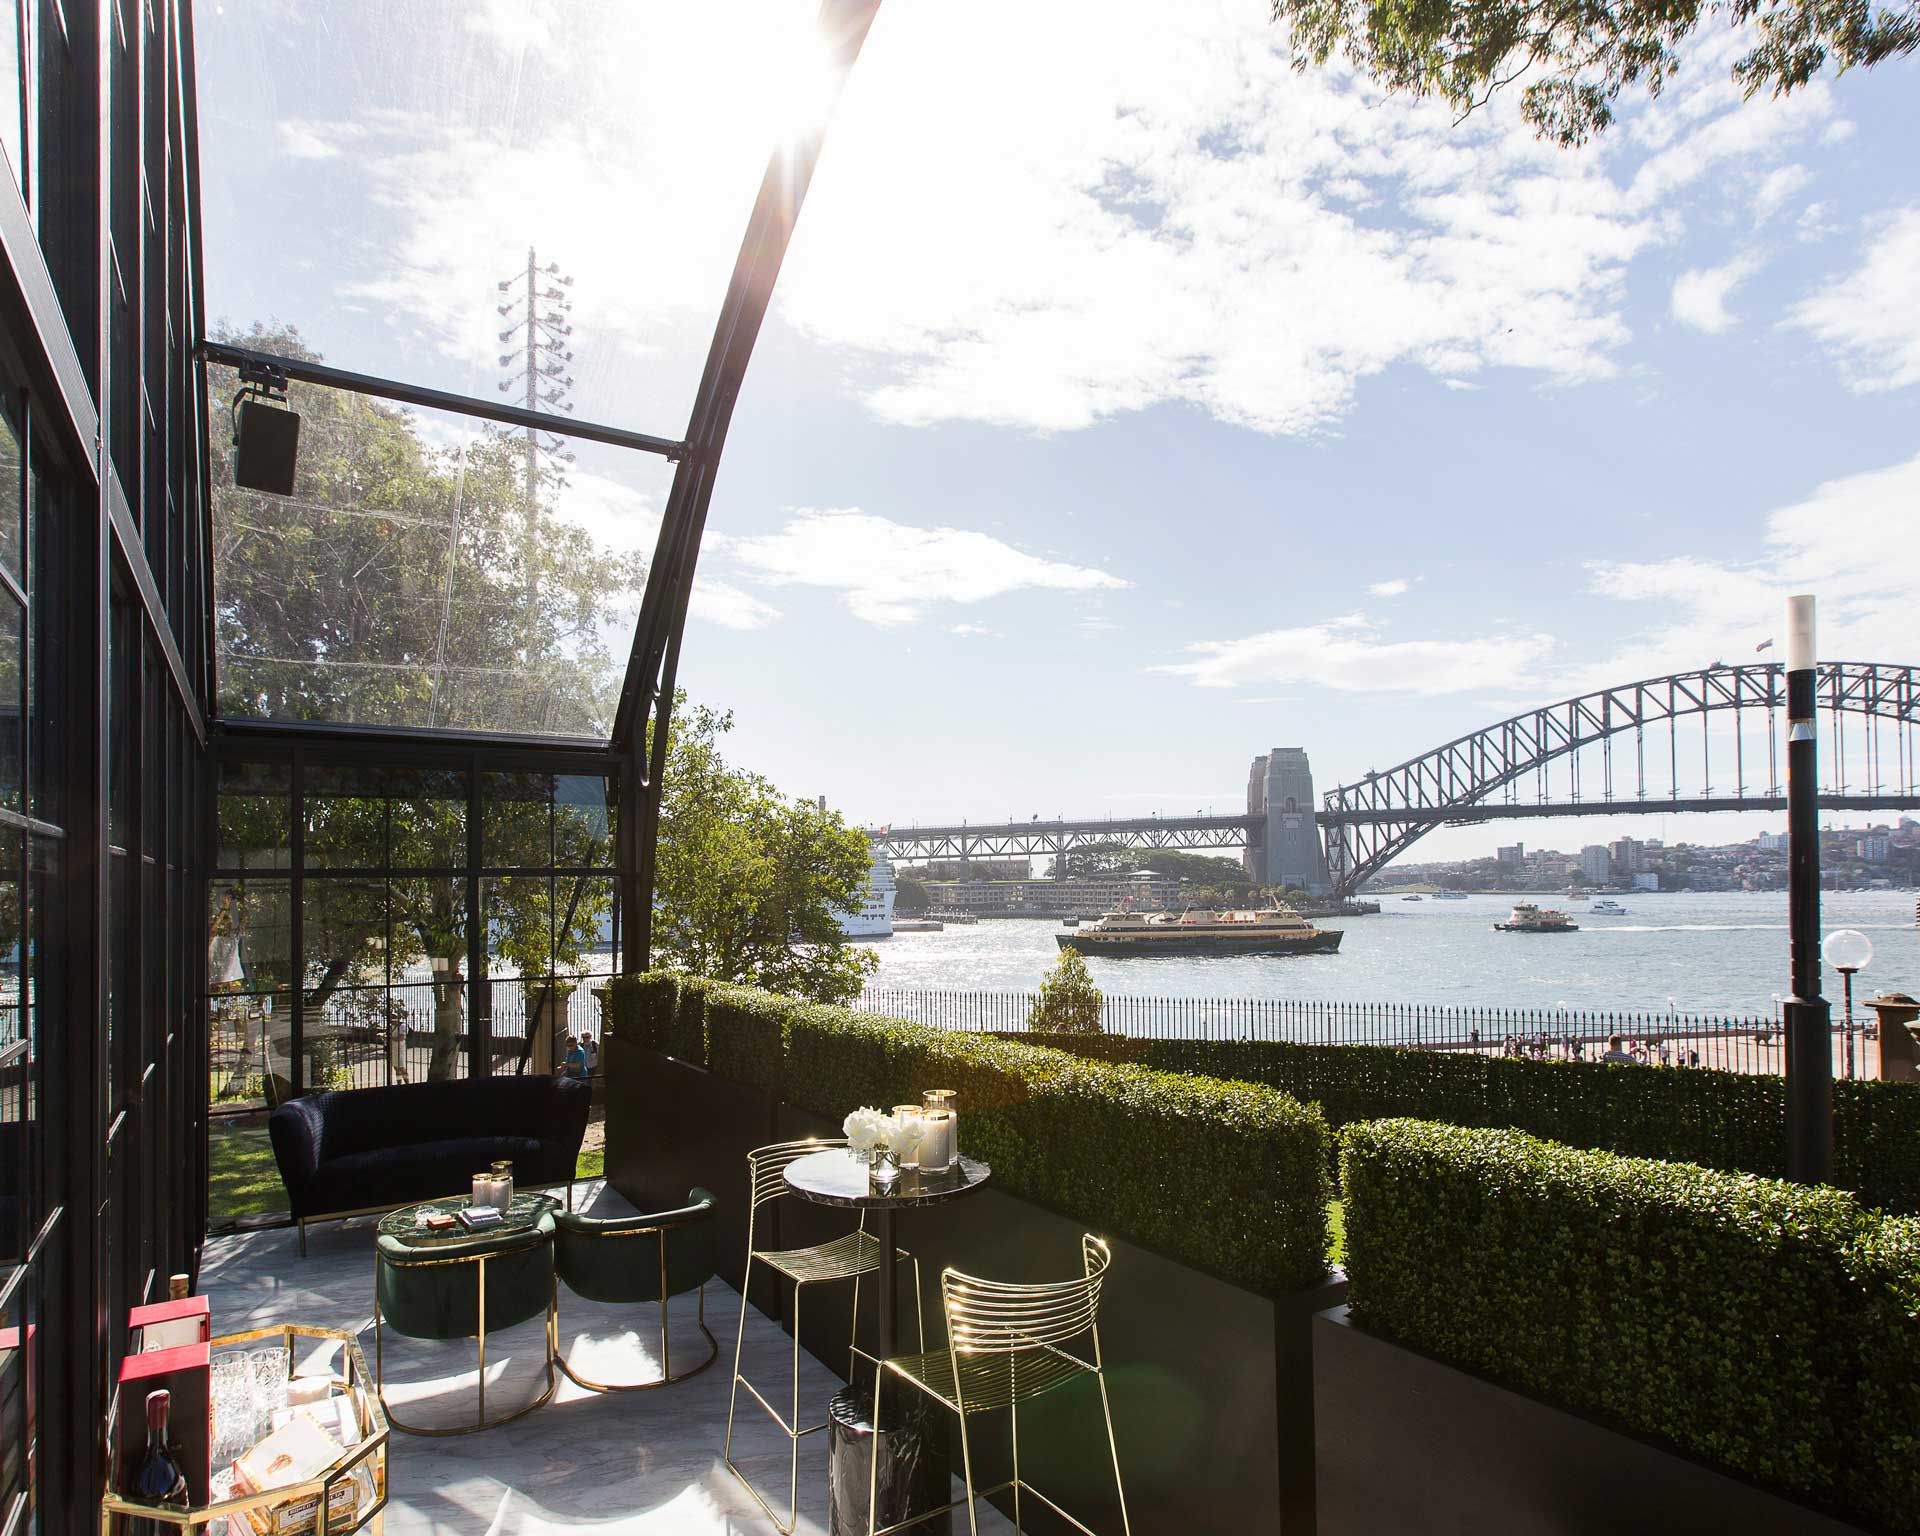 The-Glass-House-Atrium-Wedding-Royal-Botanic-Gardens-Sydney-Harbour-Bridge-2018-HR-70